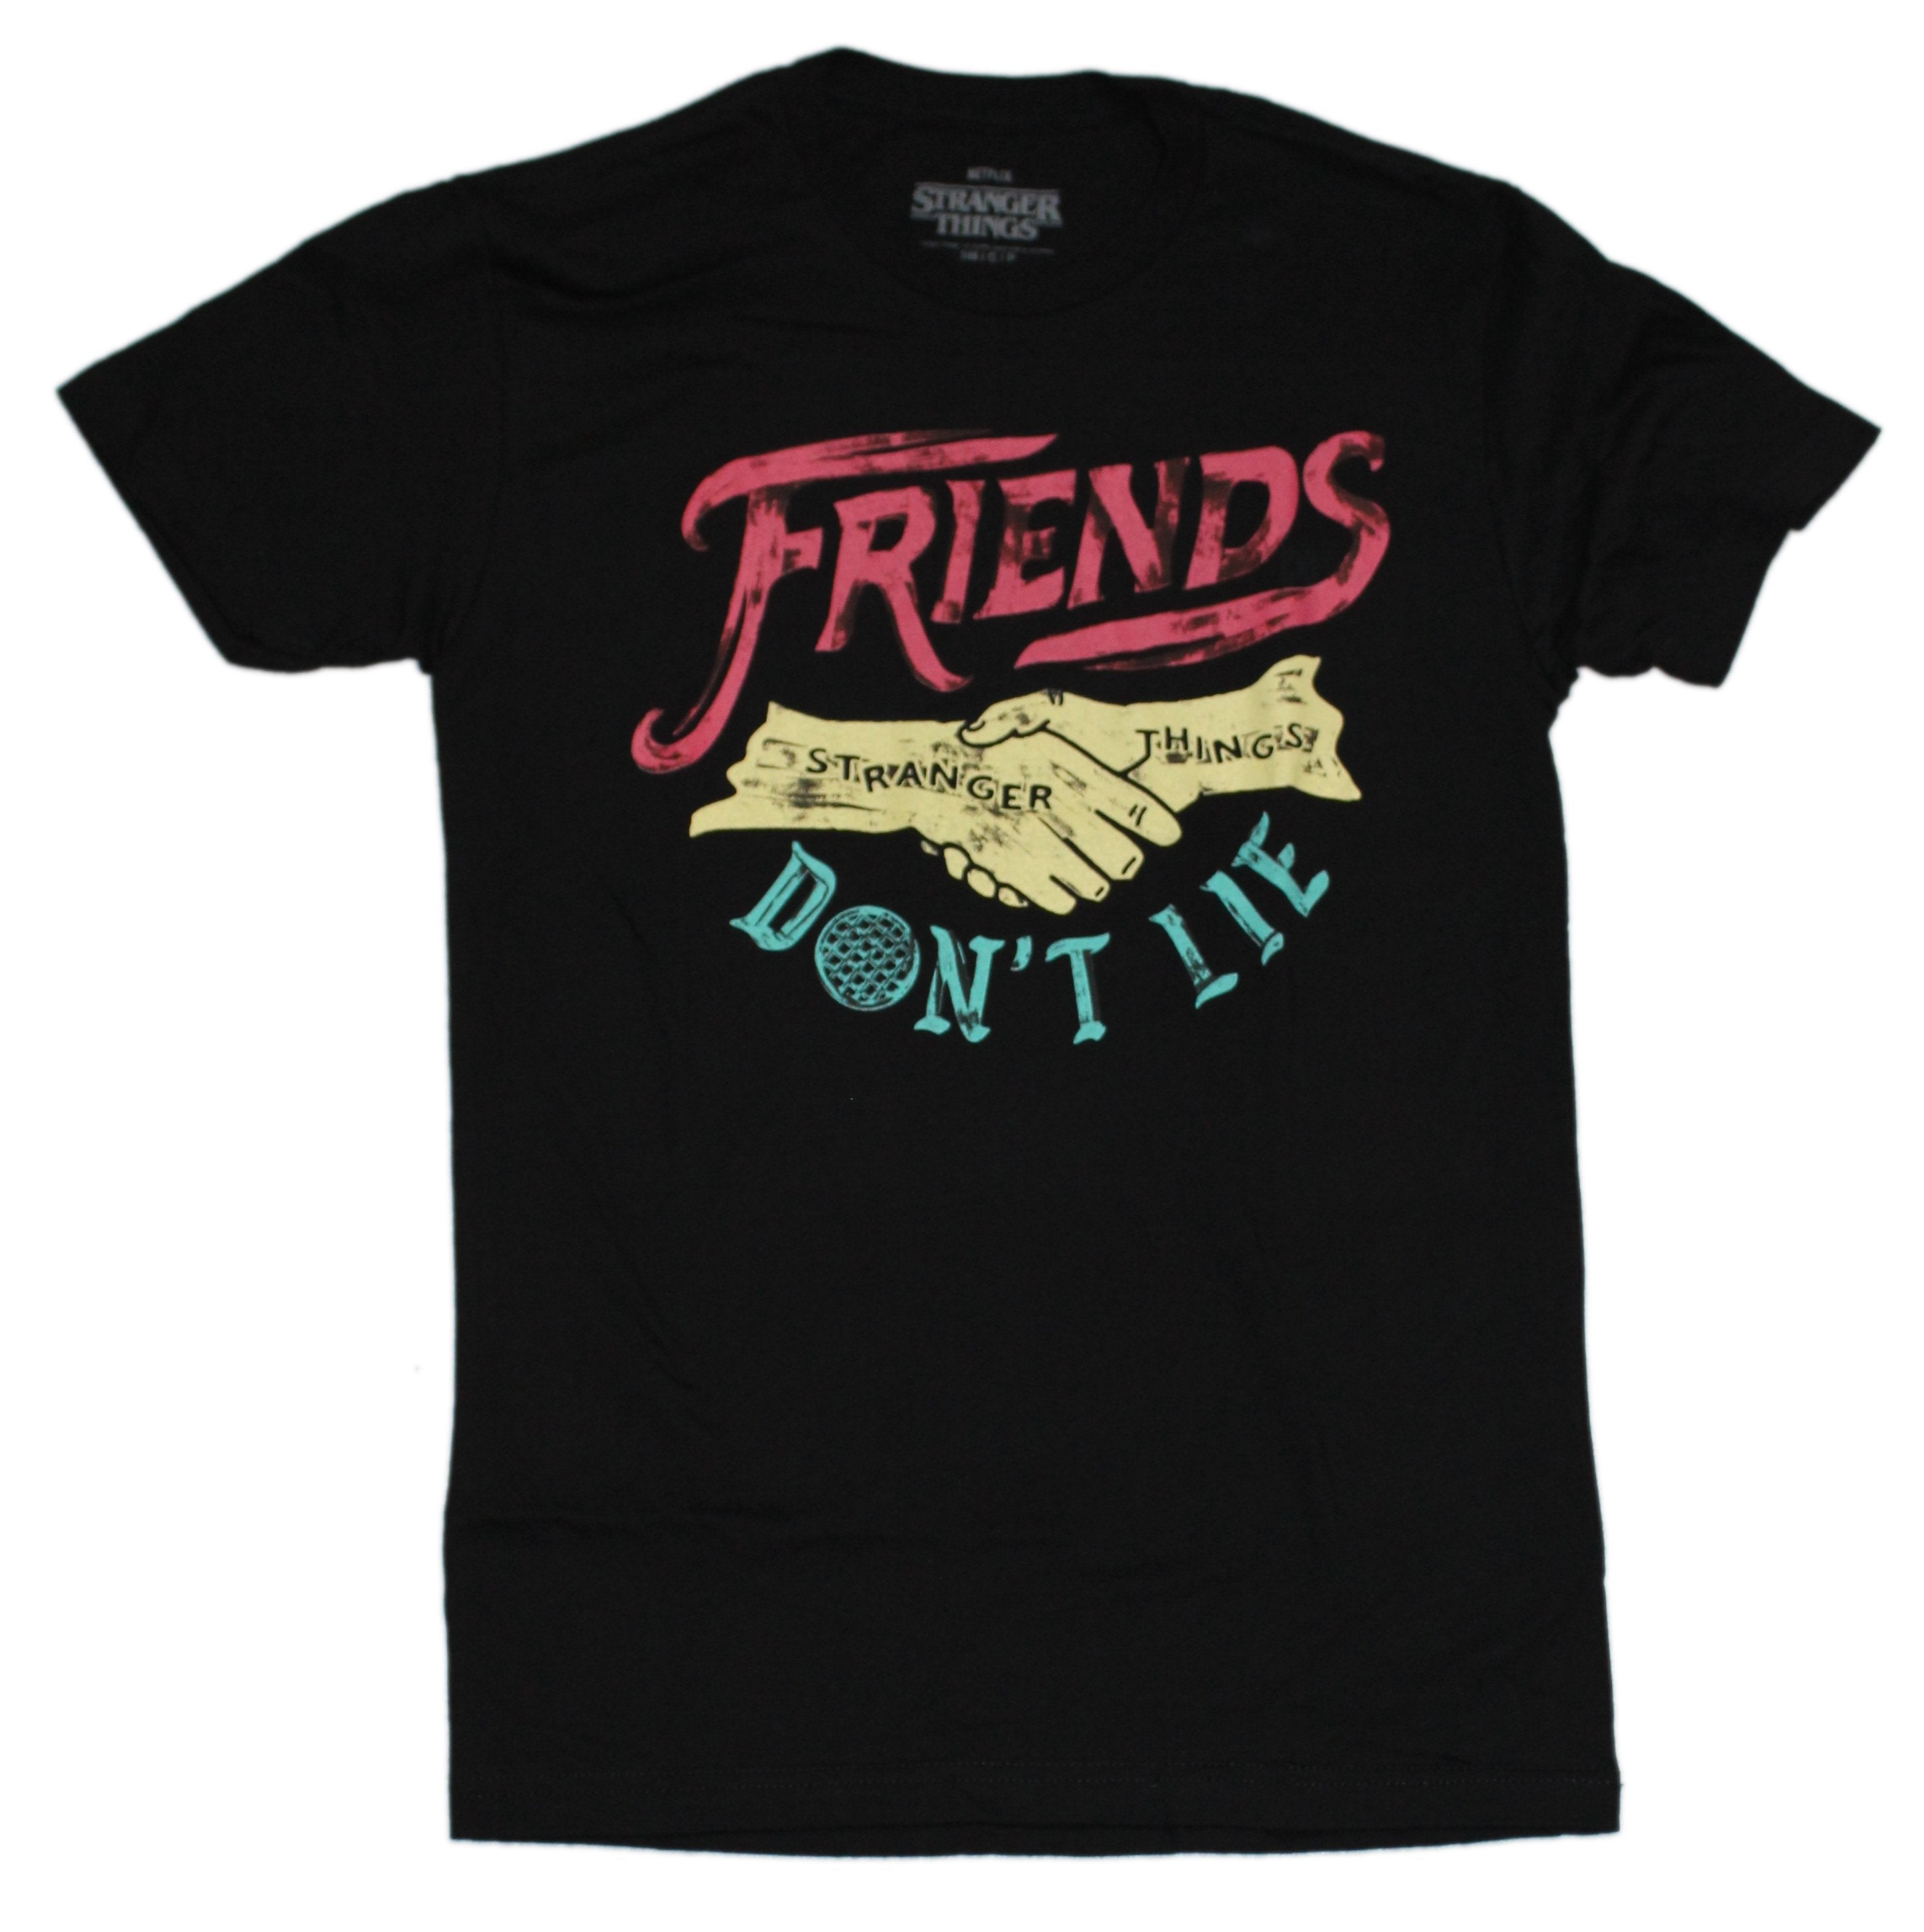 Stranger Things Mens T-Shirt - Friends Don't Lie Shaking Image